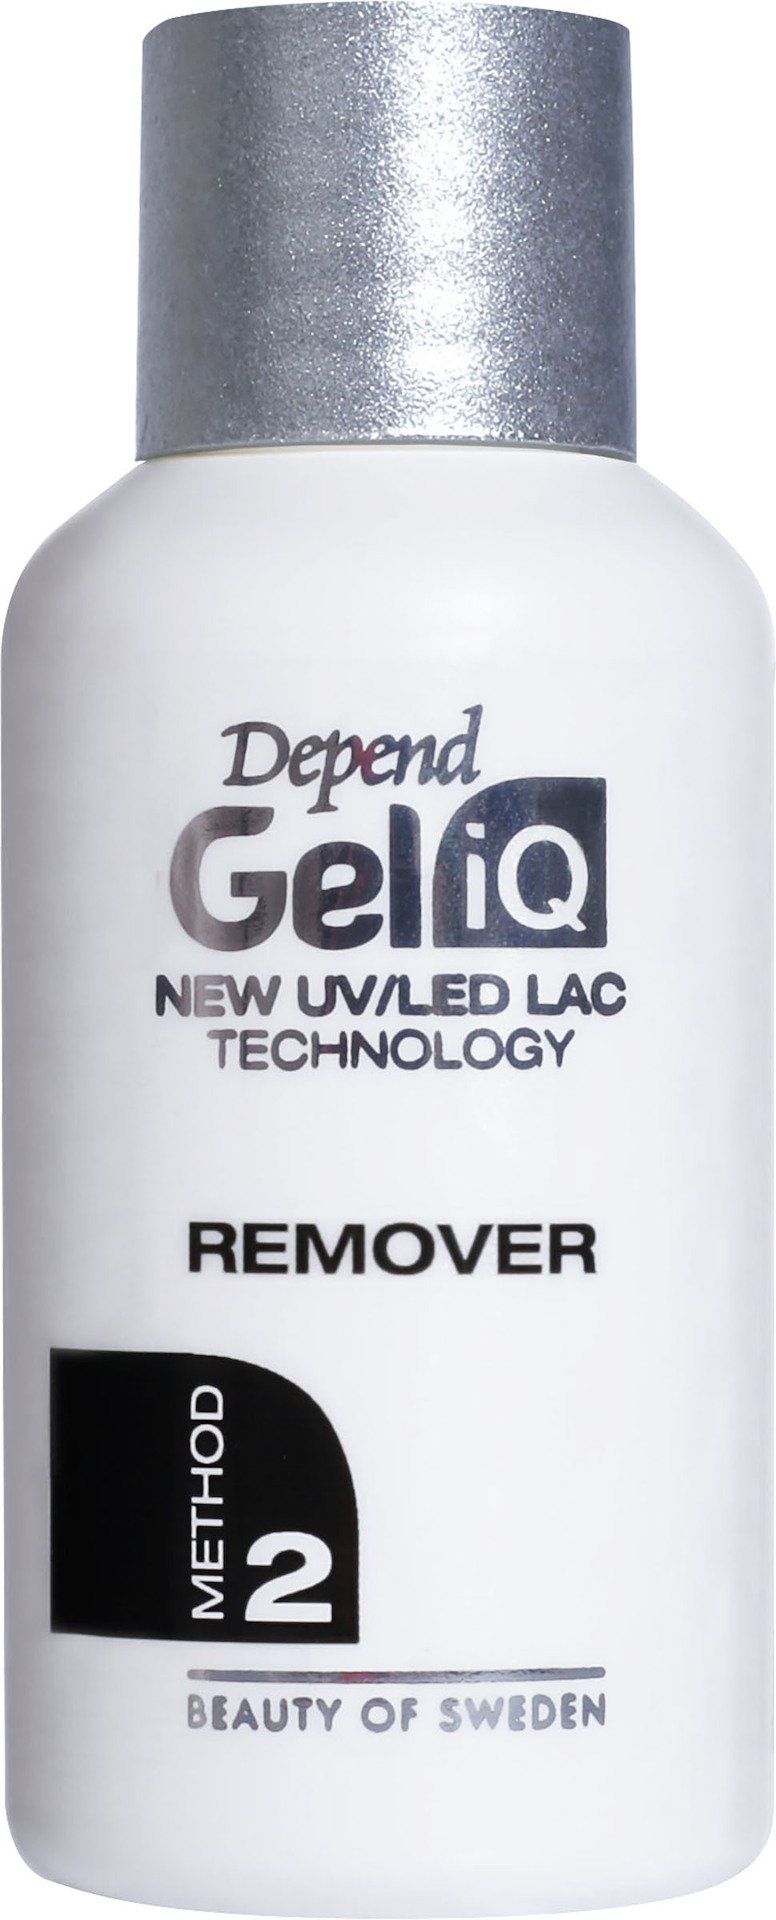 Depend Gel iQ Remover Method 2 35ml